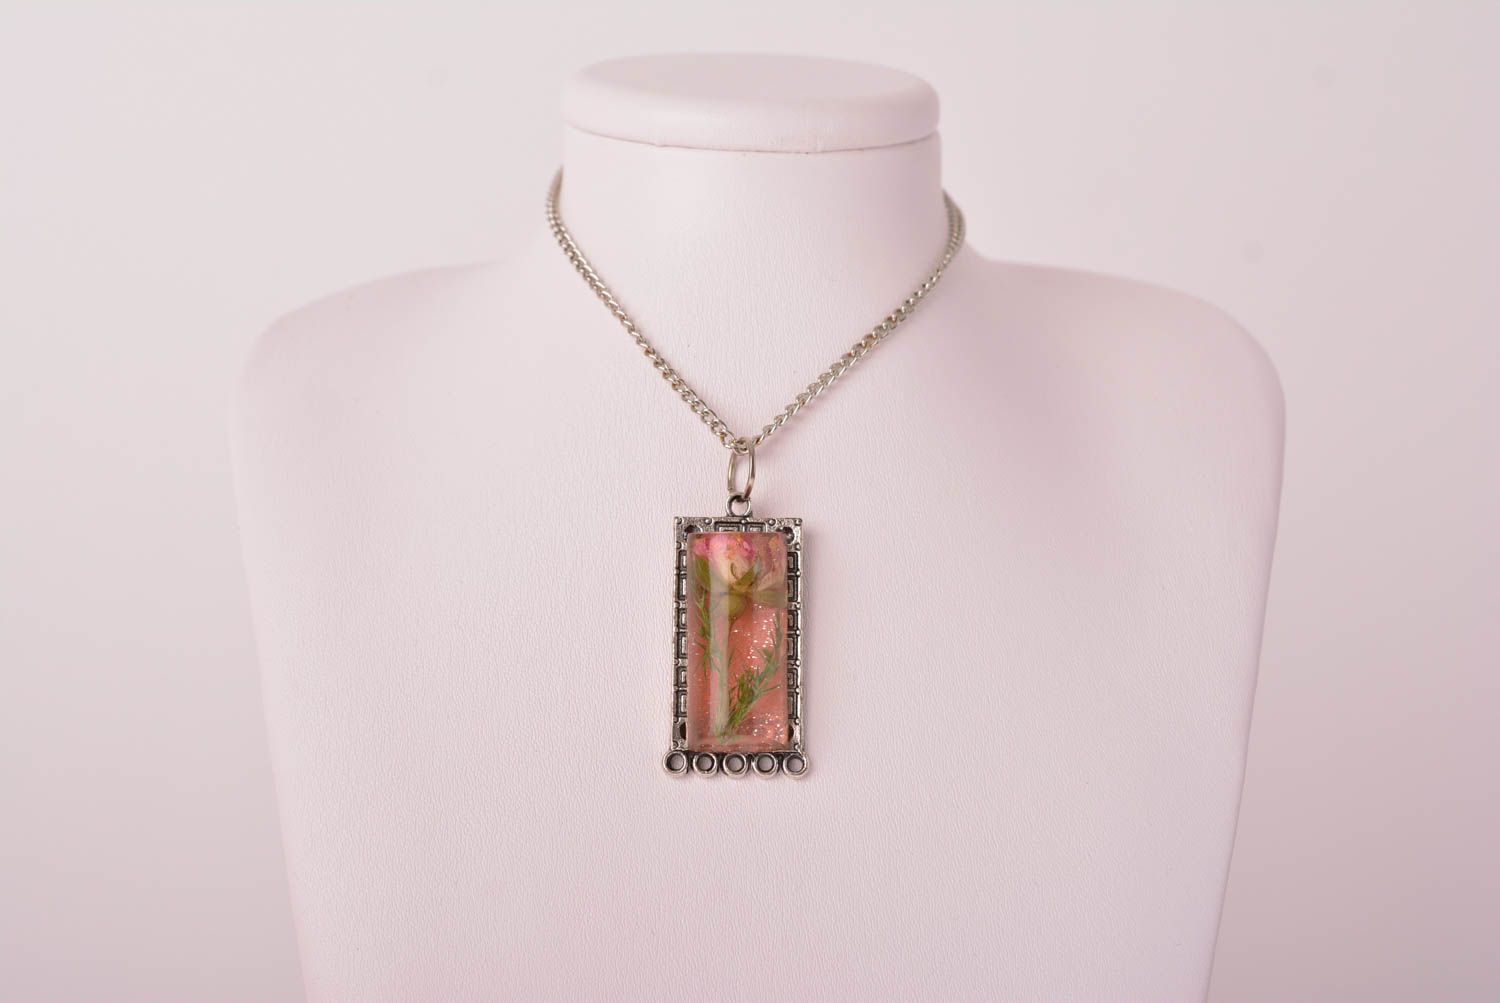 Stylish handmade flower pendant metal necklace handmade accessories for girls photo 2